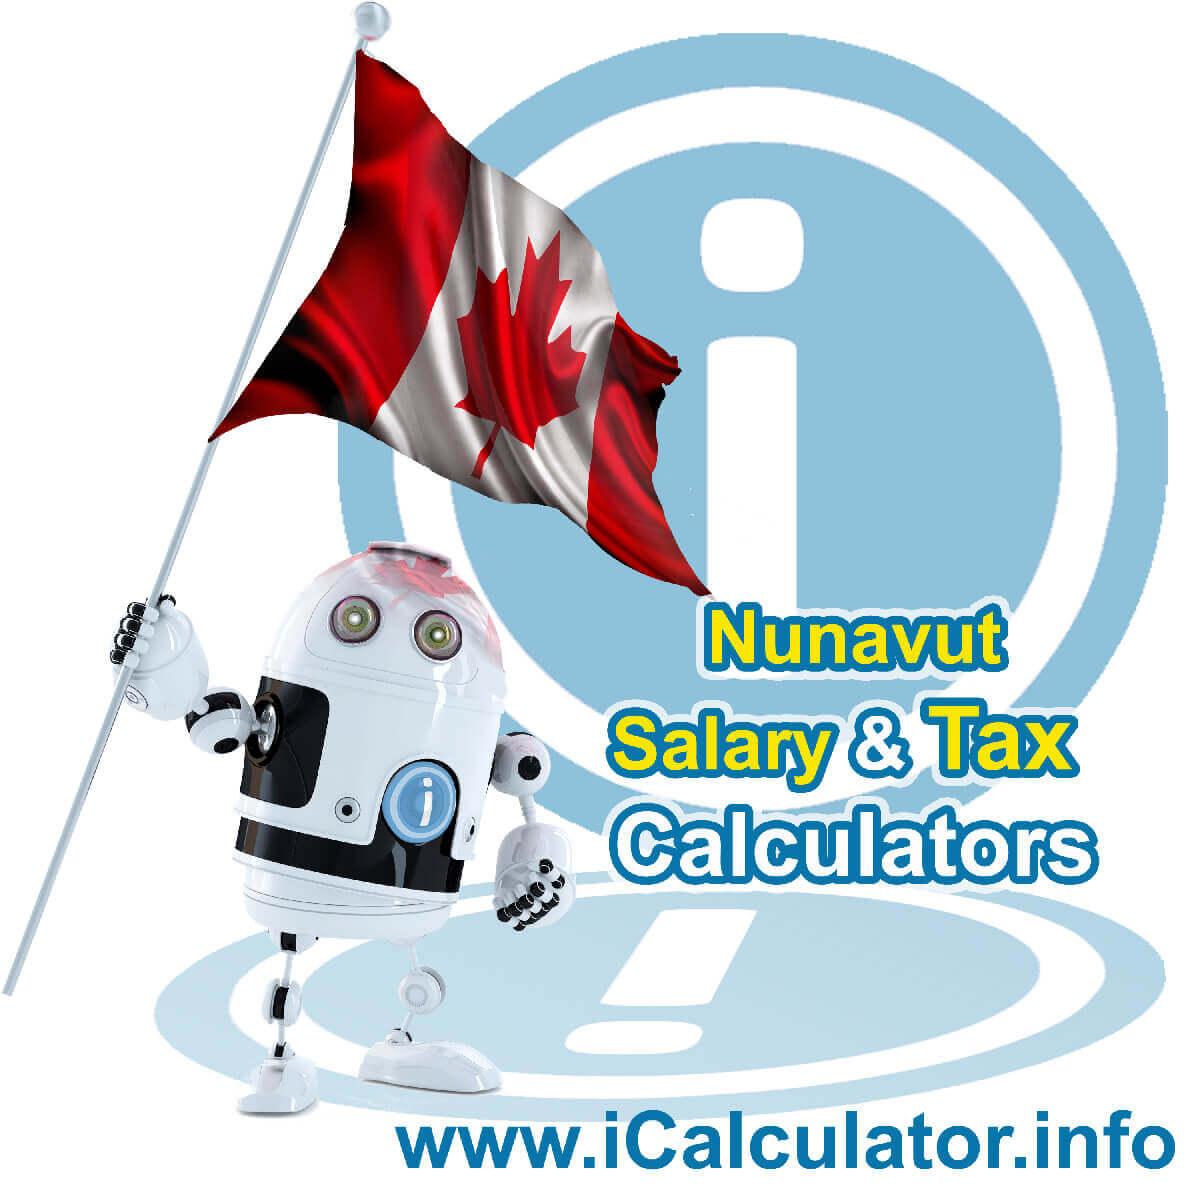 Nunavut 2022 Salary Comparison Calculator. This image shows the Nunavut flag and information relating to the tax formula used in the Nunavut 2022 Salary Comparison Calculator